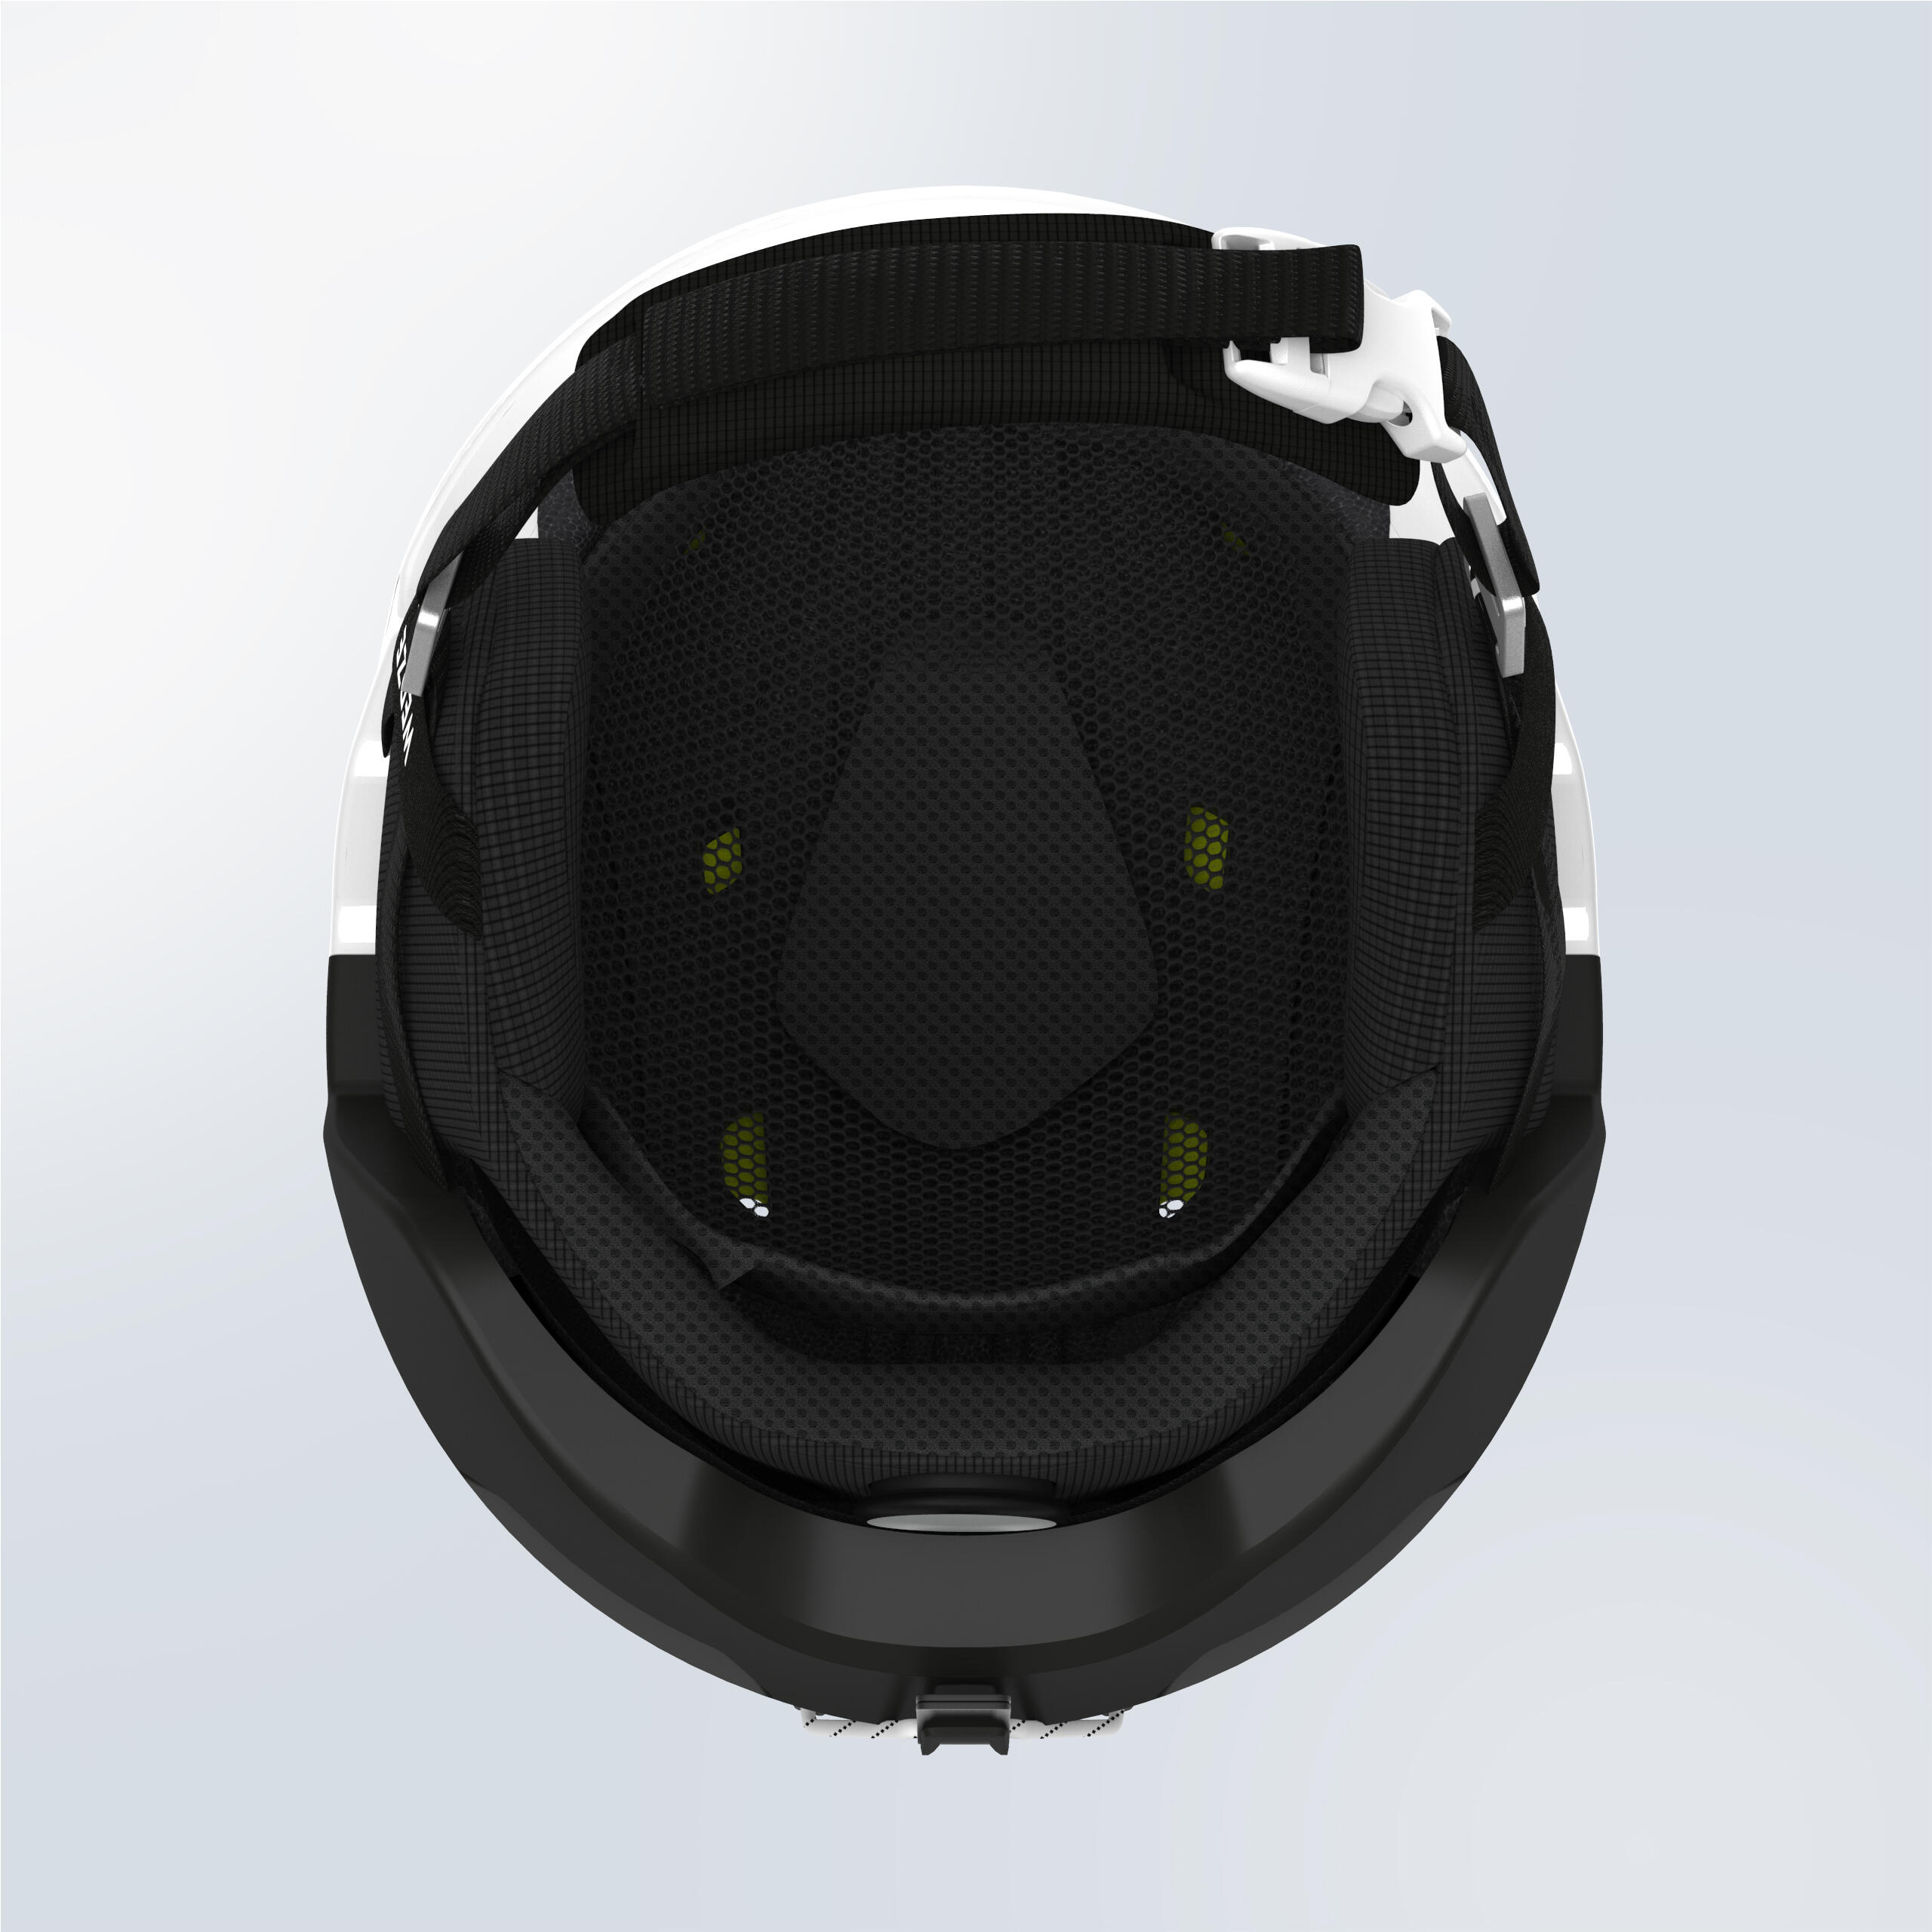 Ski Helmet - PST 580 Black/White - WEDZE